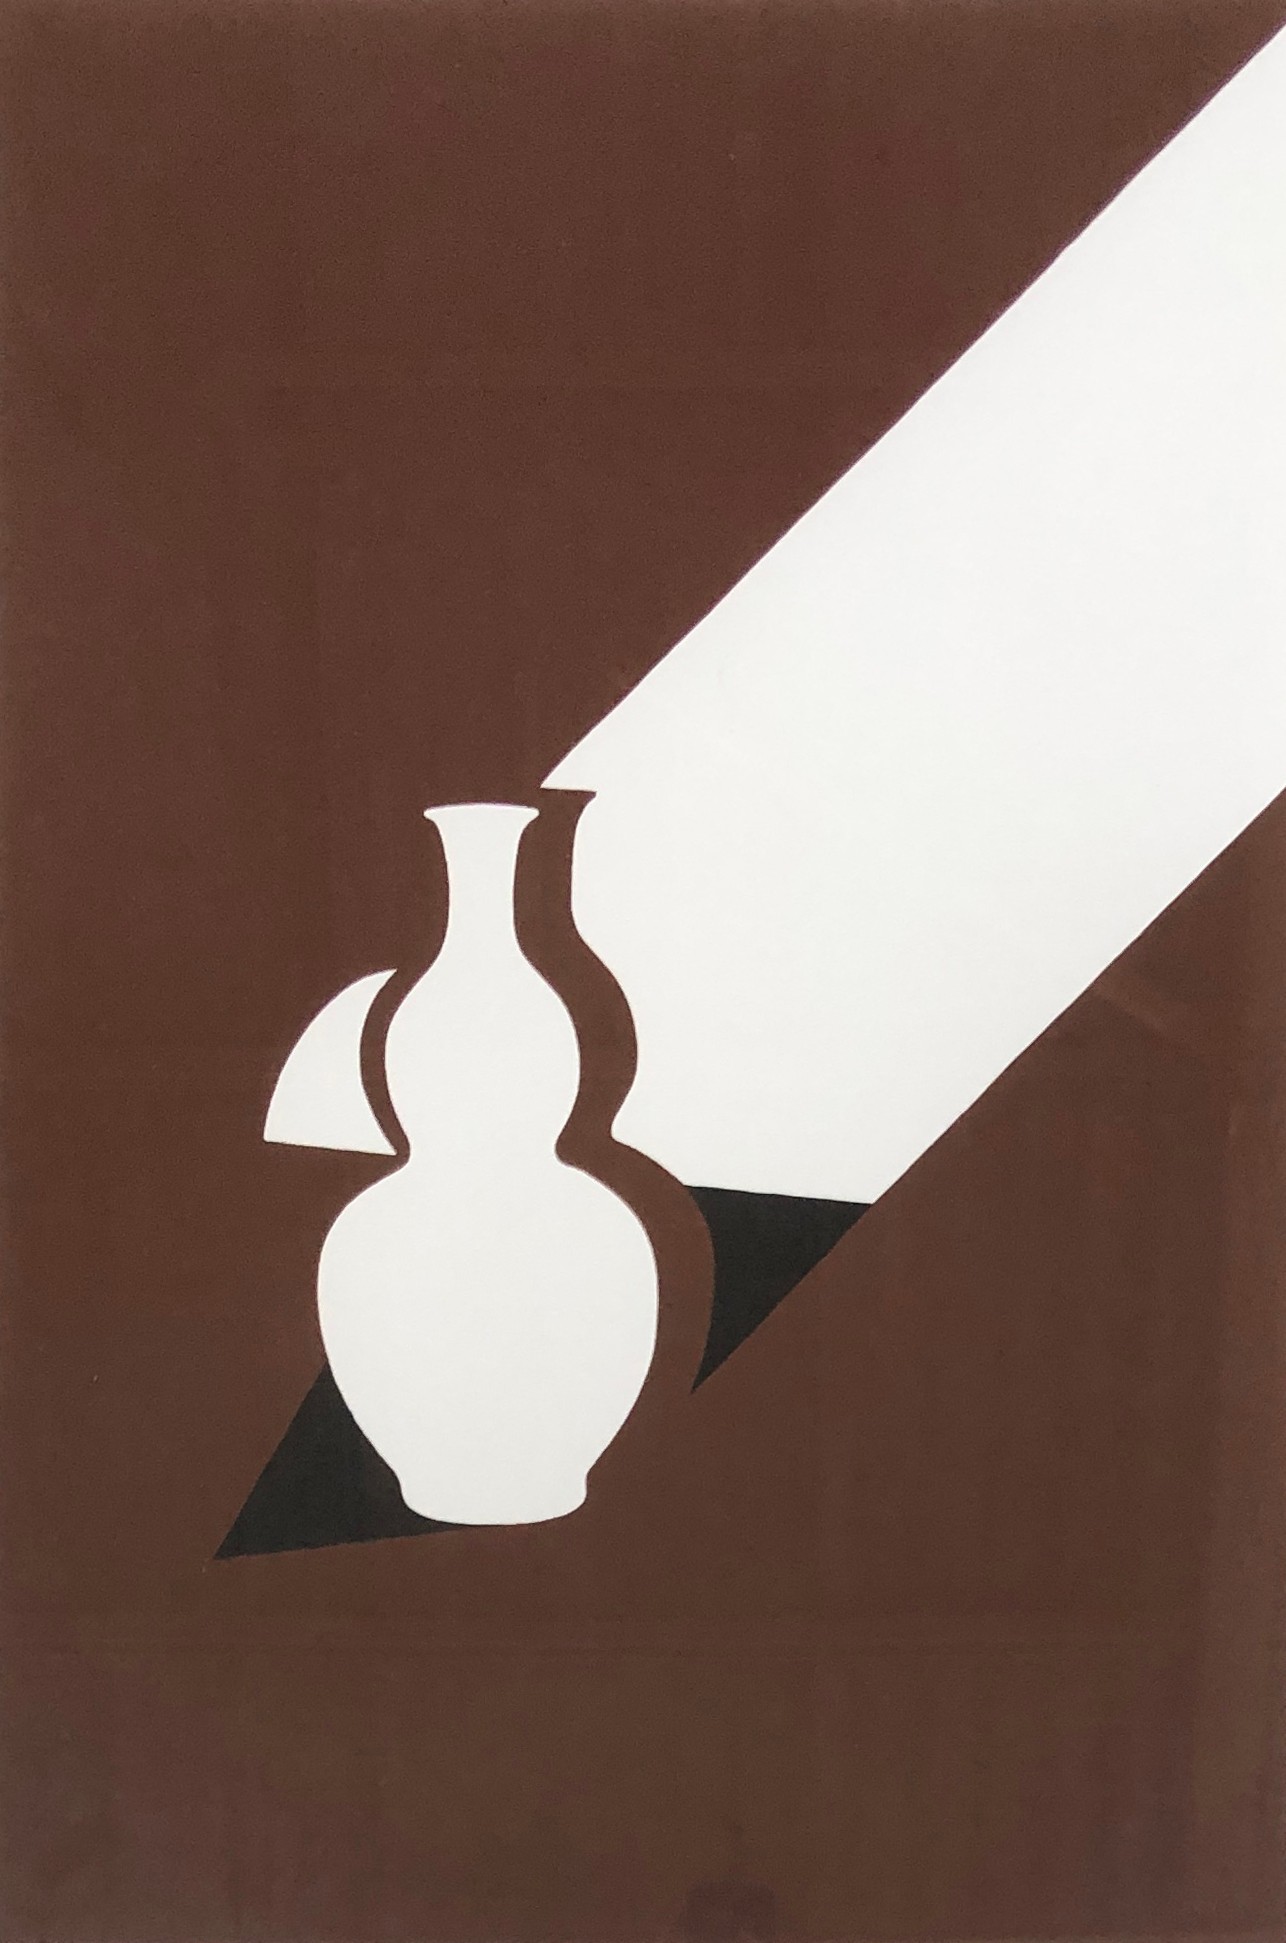 Patrick Caulfield RA (1936-2005), 'Arita Flask' 1990, artist's proof, screenprint, signed in